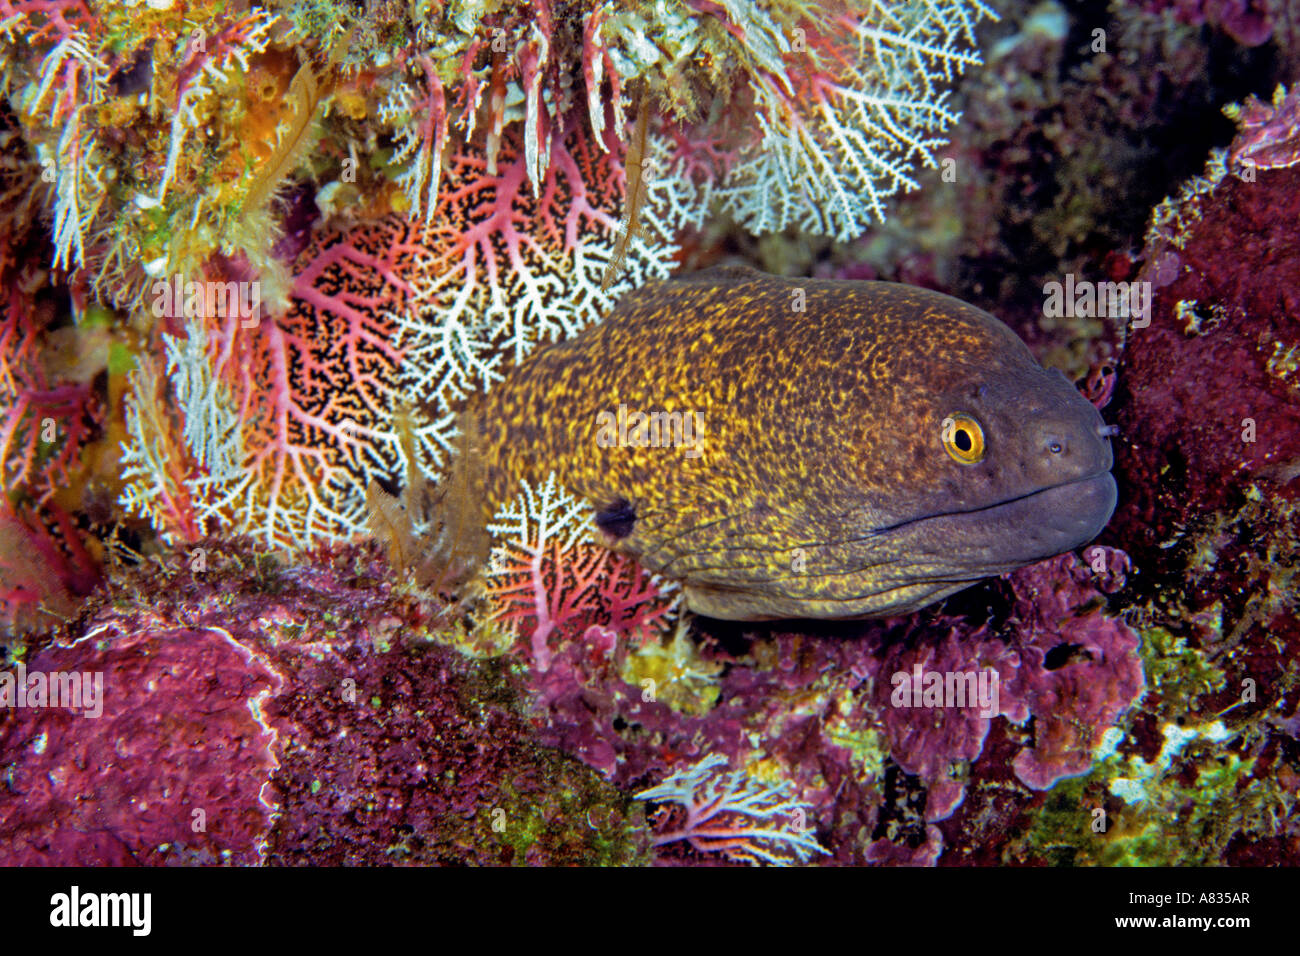 A yellowmargin moray eel, Gymnothorax flavimarginatus, peering out of lace coral, Stylaster sp, Saipan, Micronesia. Stock Photo